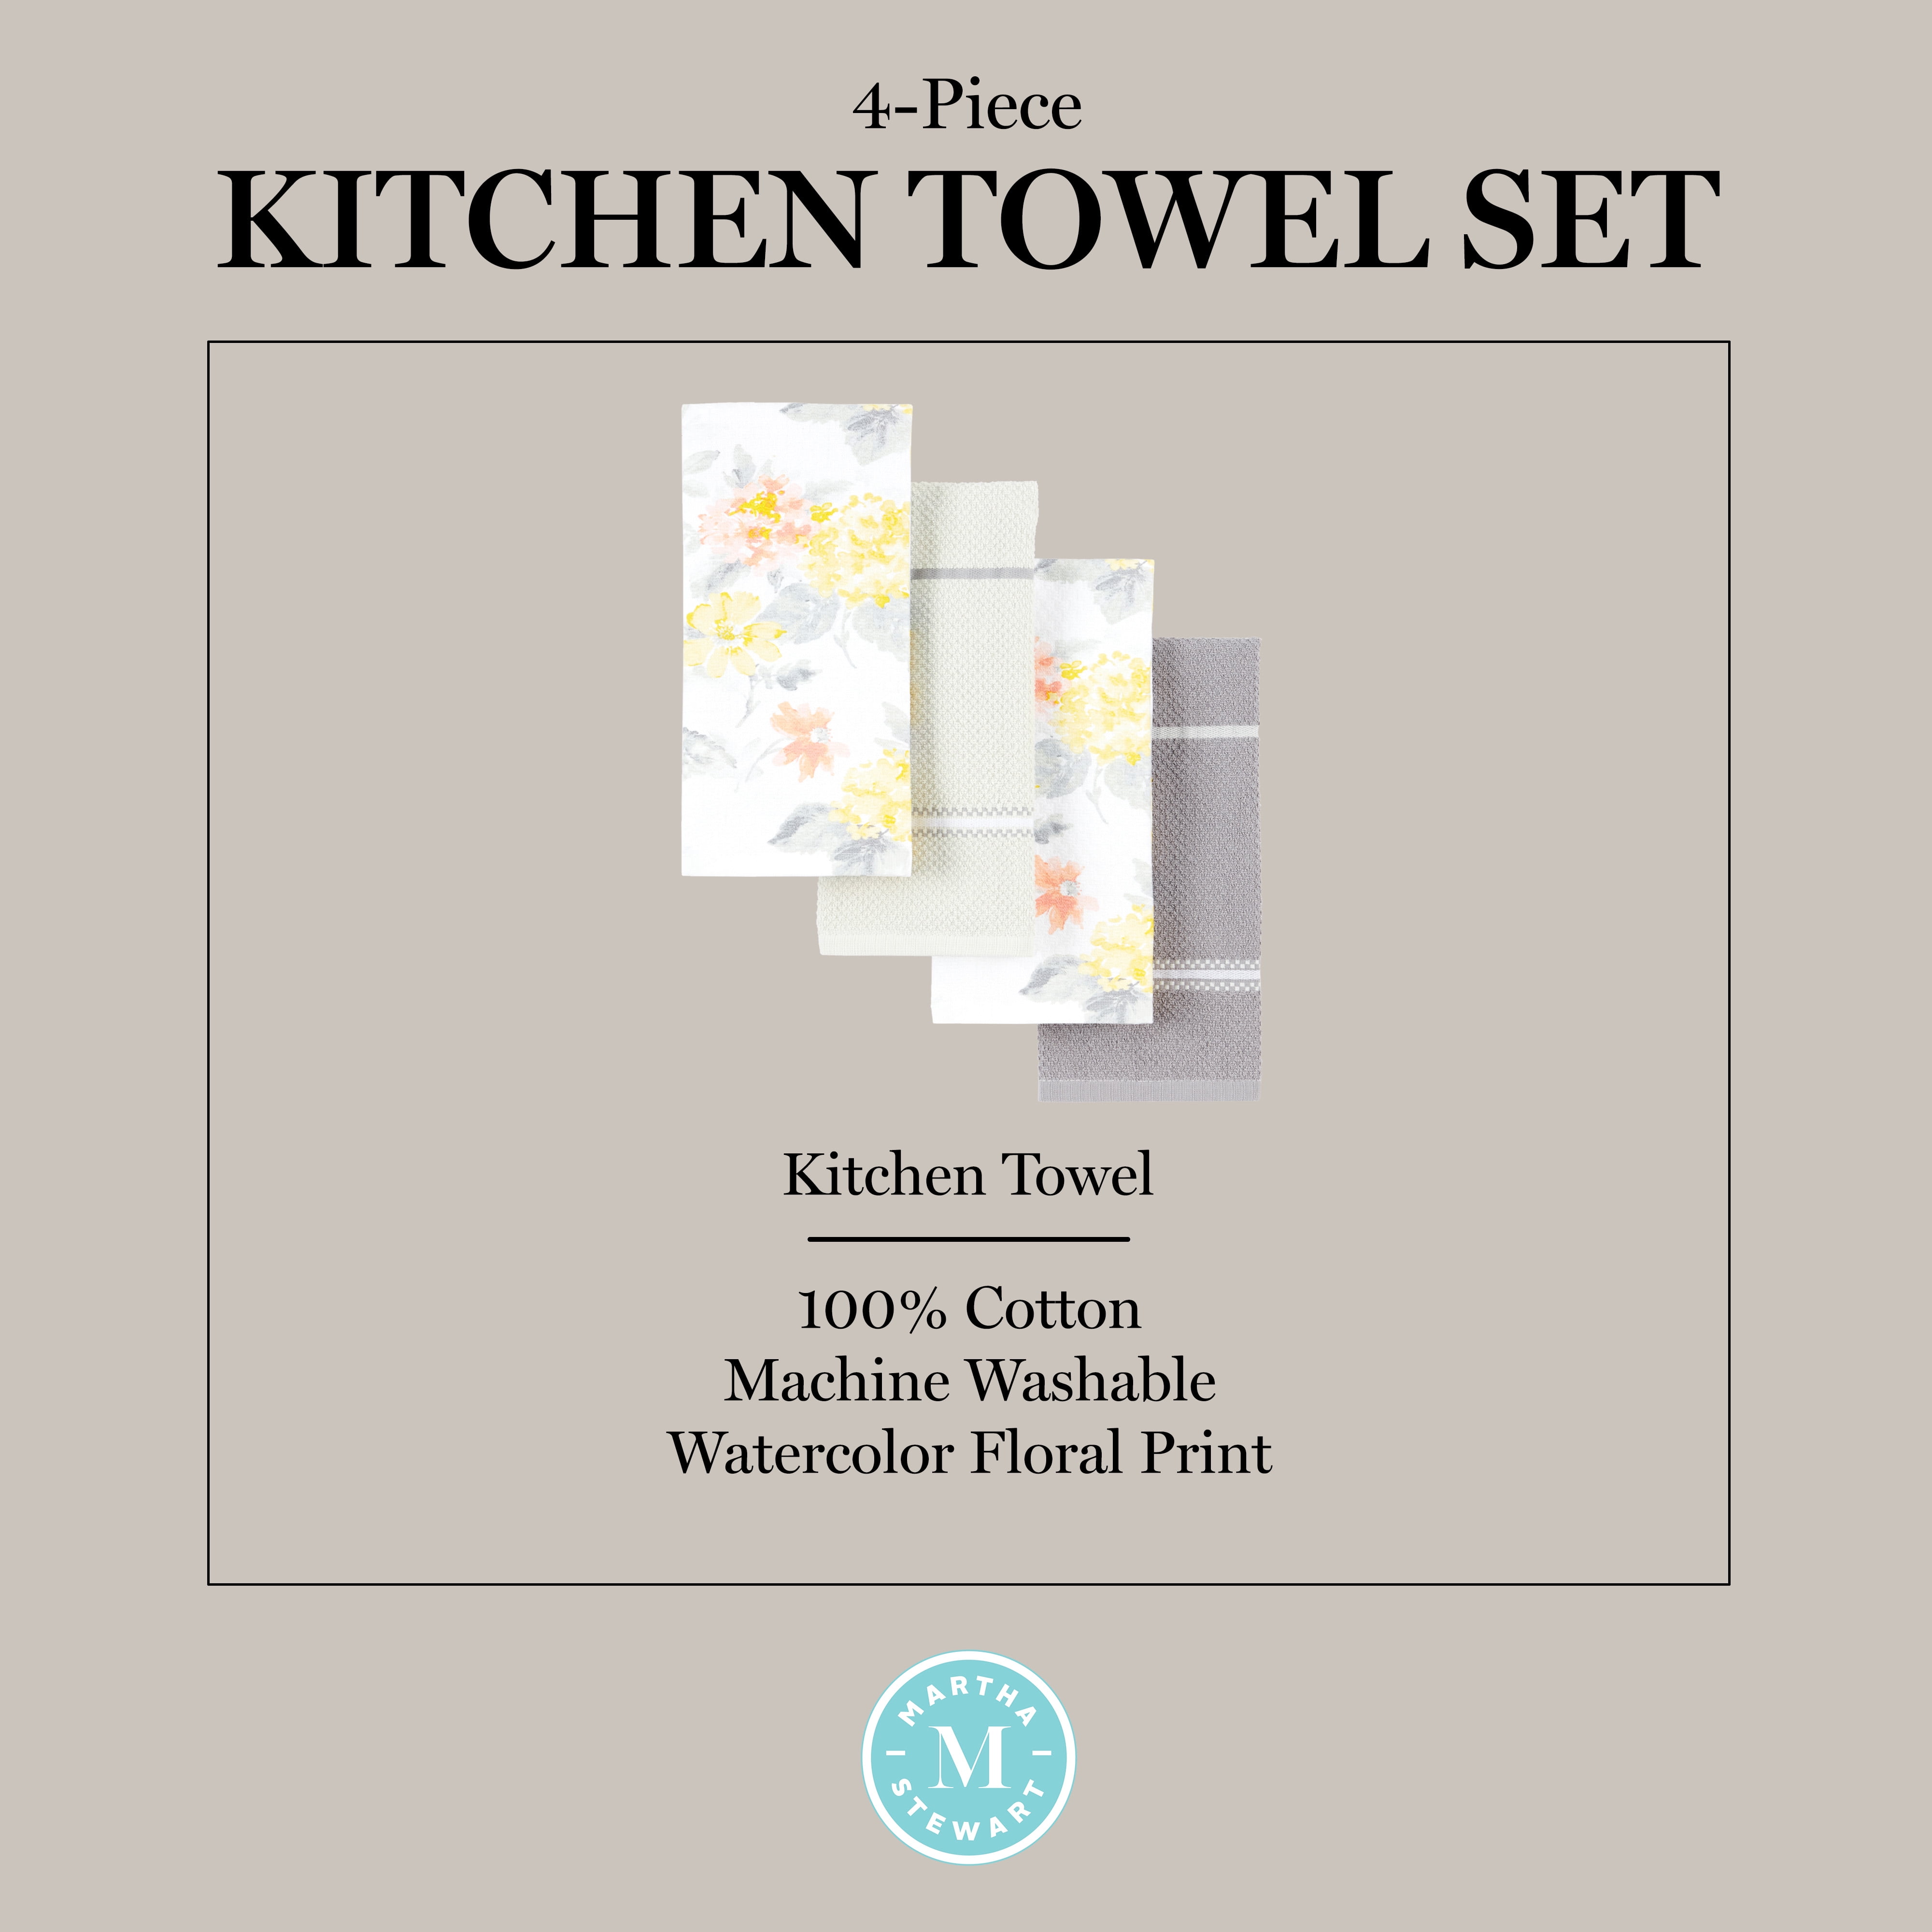 Martha Stewart Everyday Pink & Aqua Turkish Tile Kitchen Towel, 2-Pack